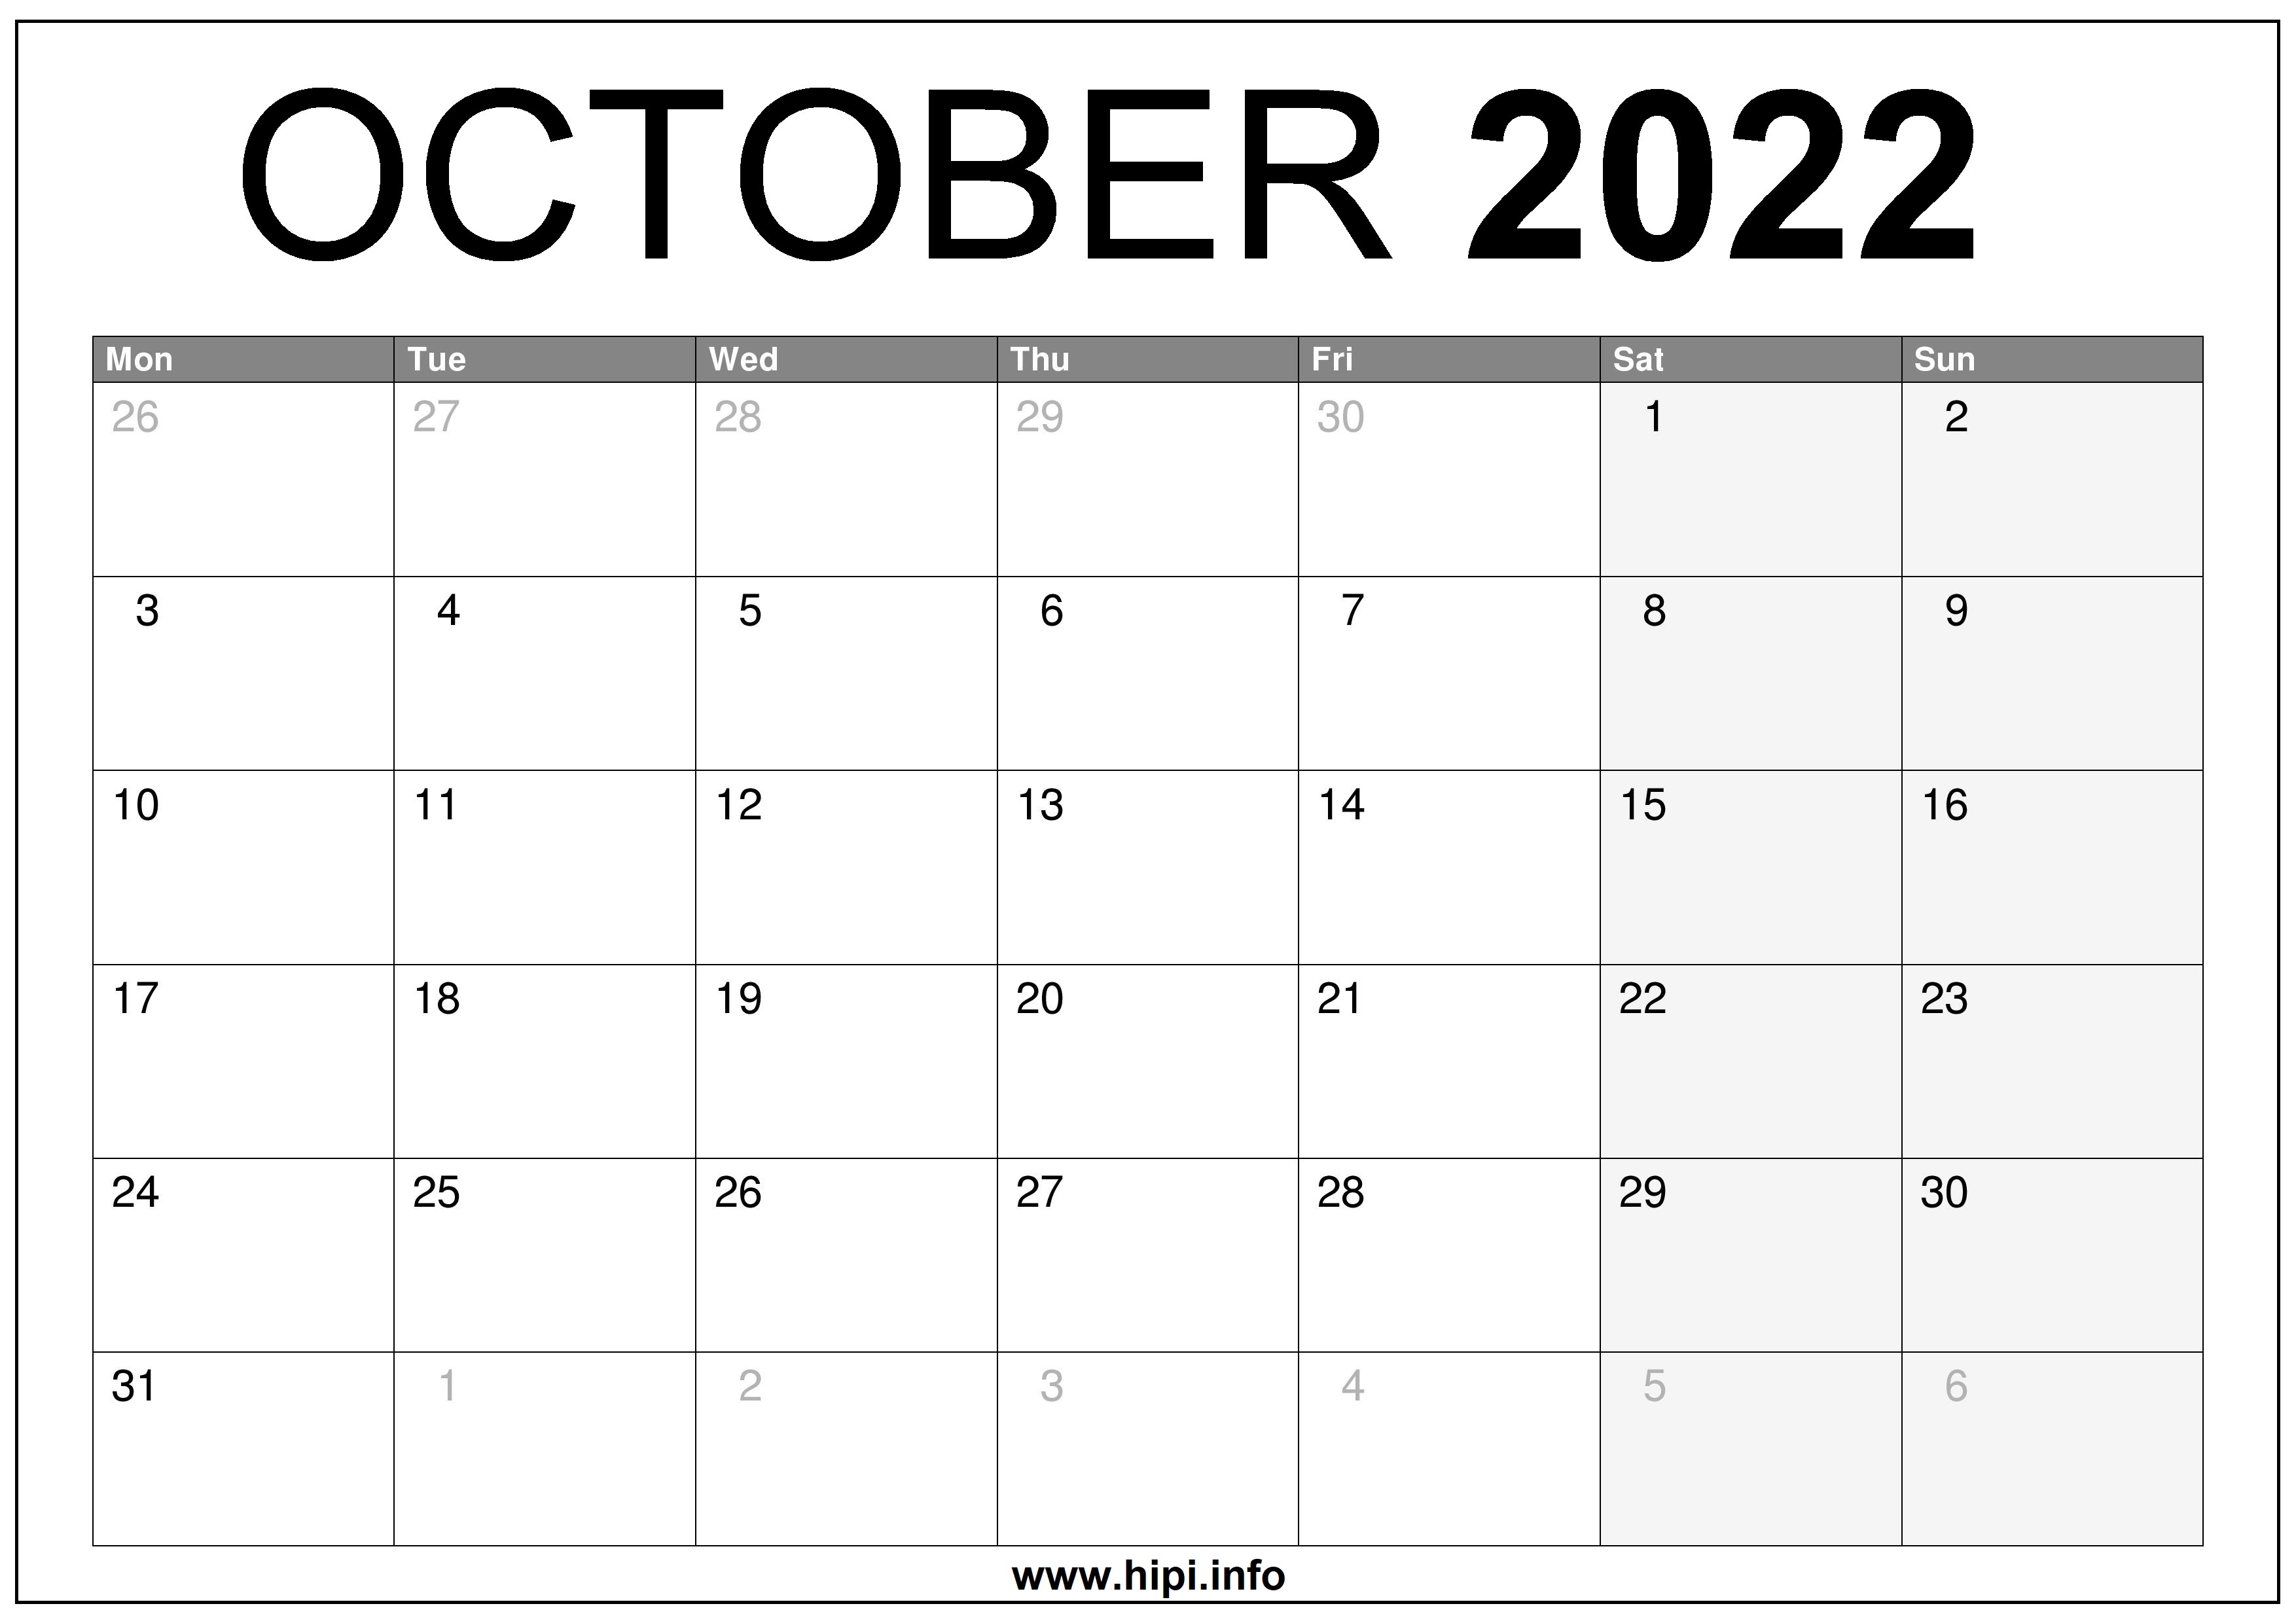 October 2022 Calendar Page October 2022 Uk Calendar Printable Free - Hipi.info | Calendars Printable  Free